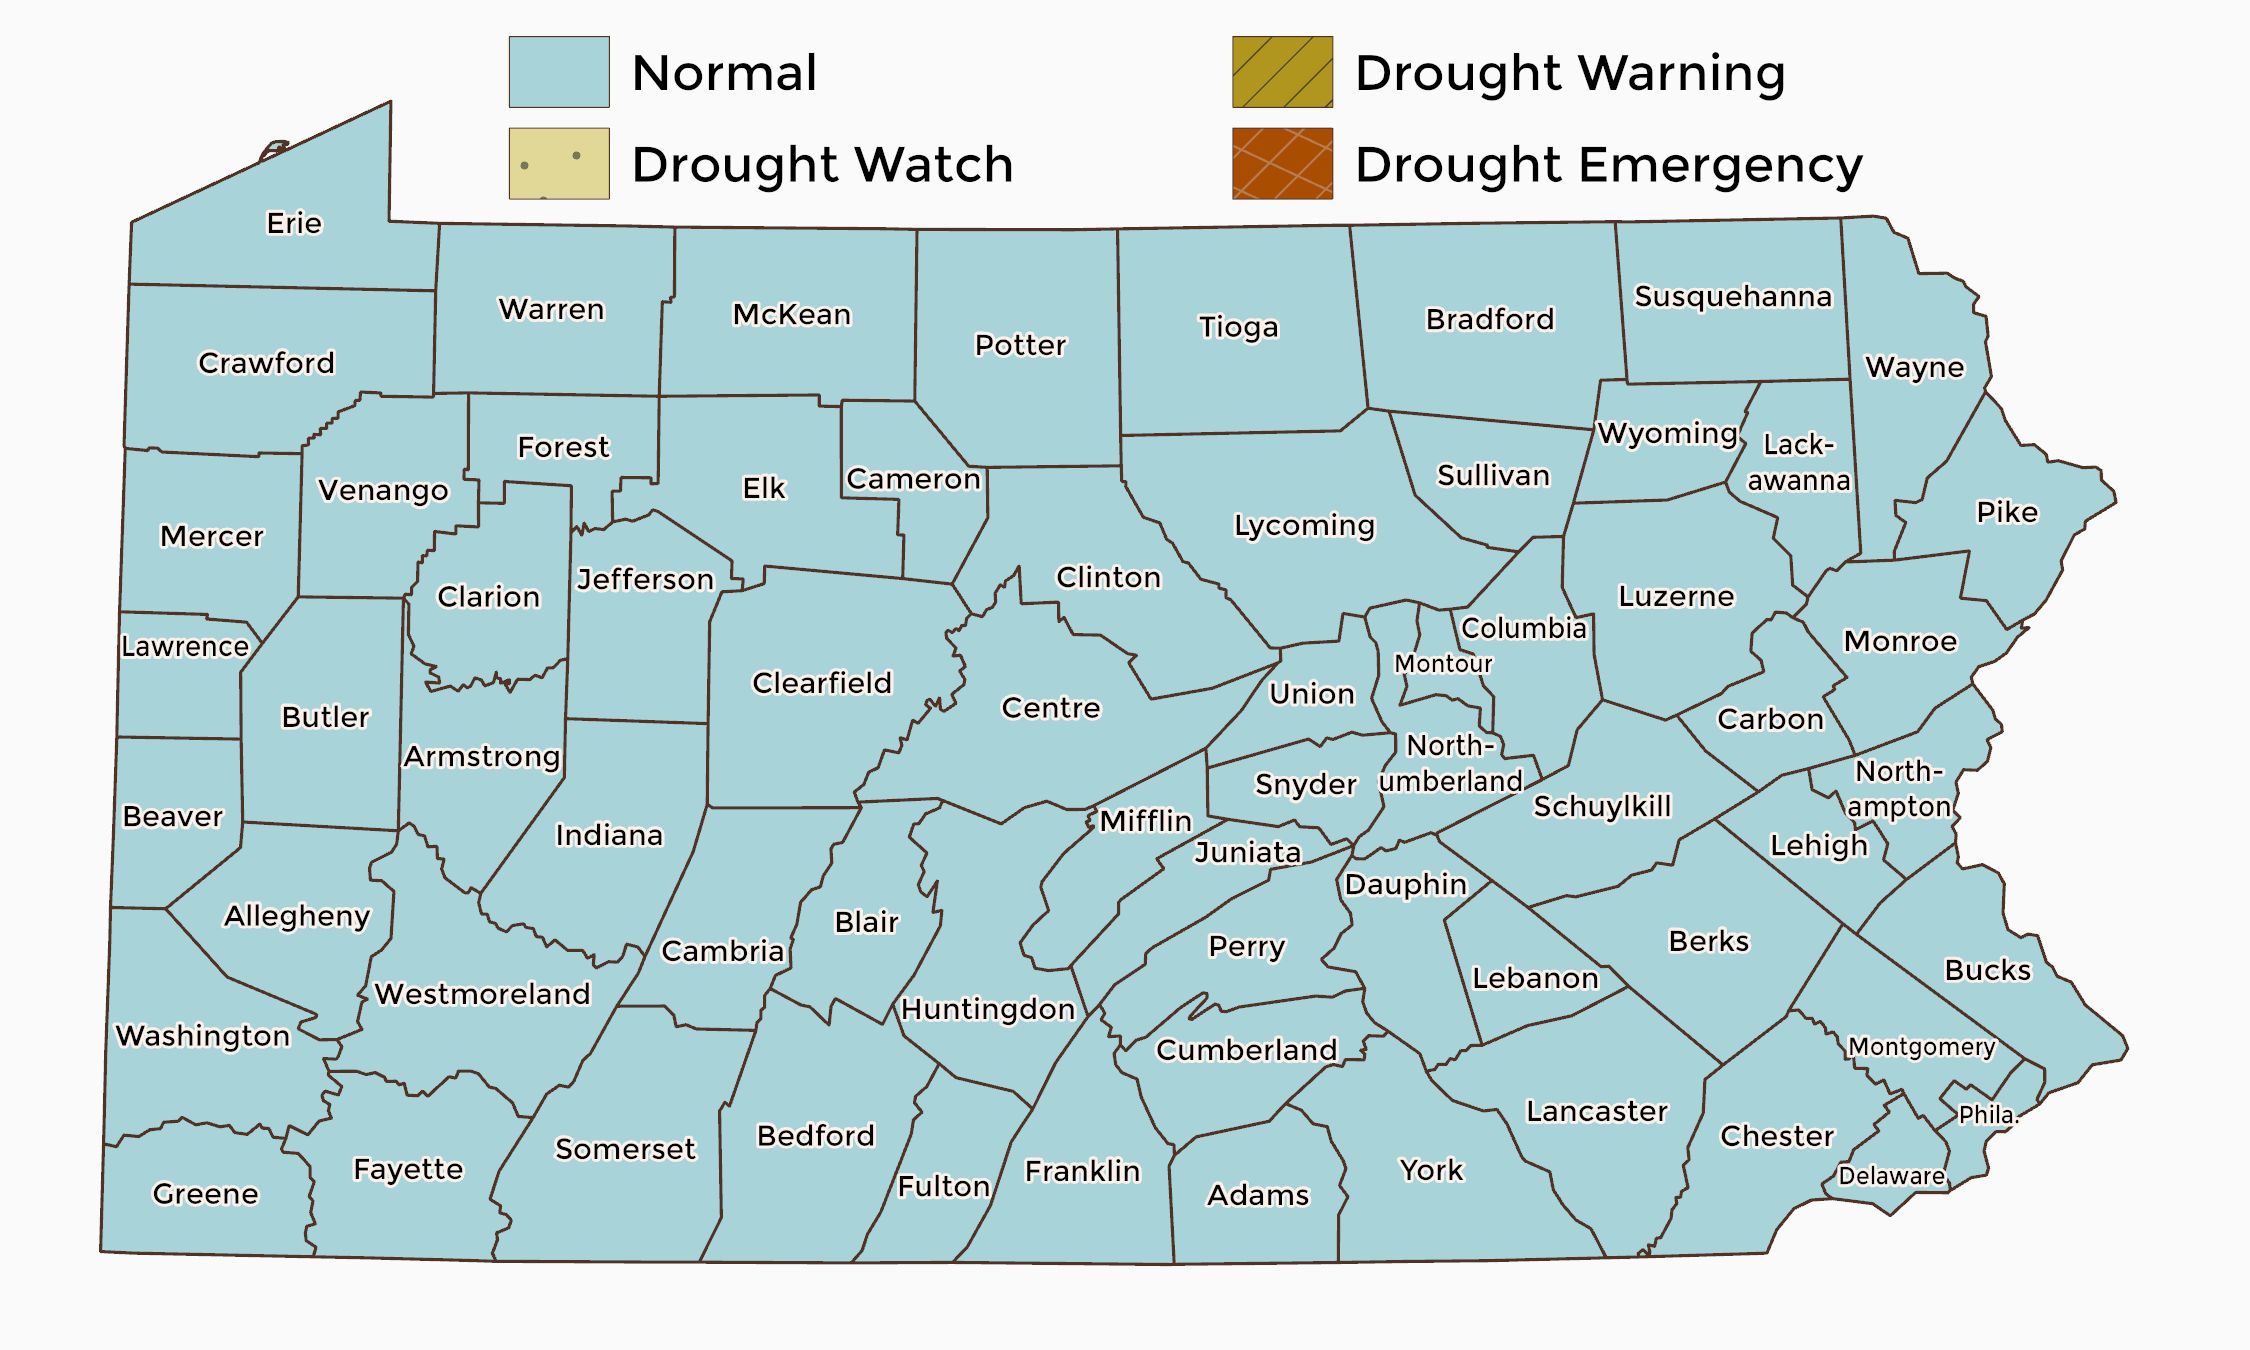 Drought Map of Pennsylvania